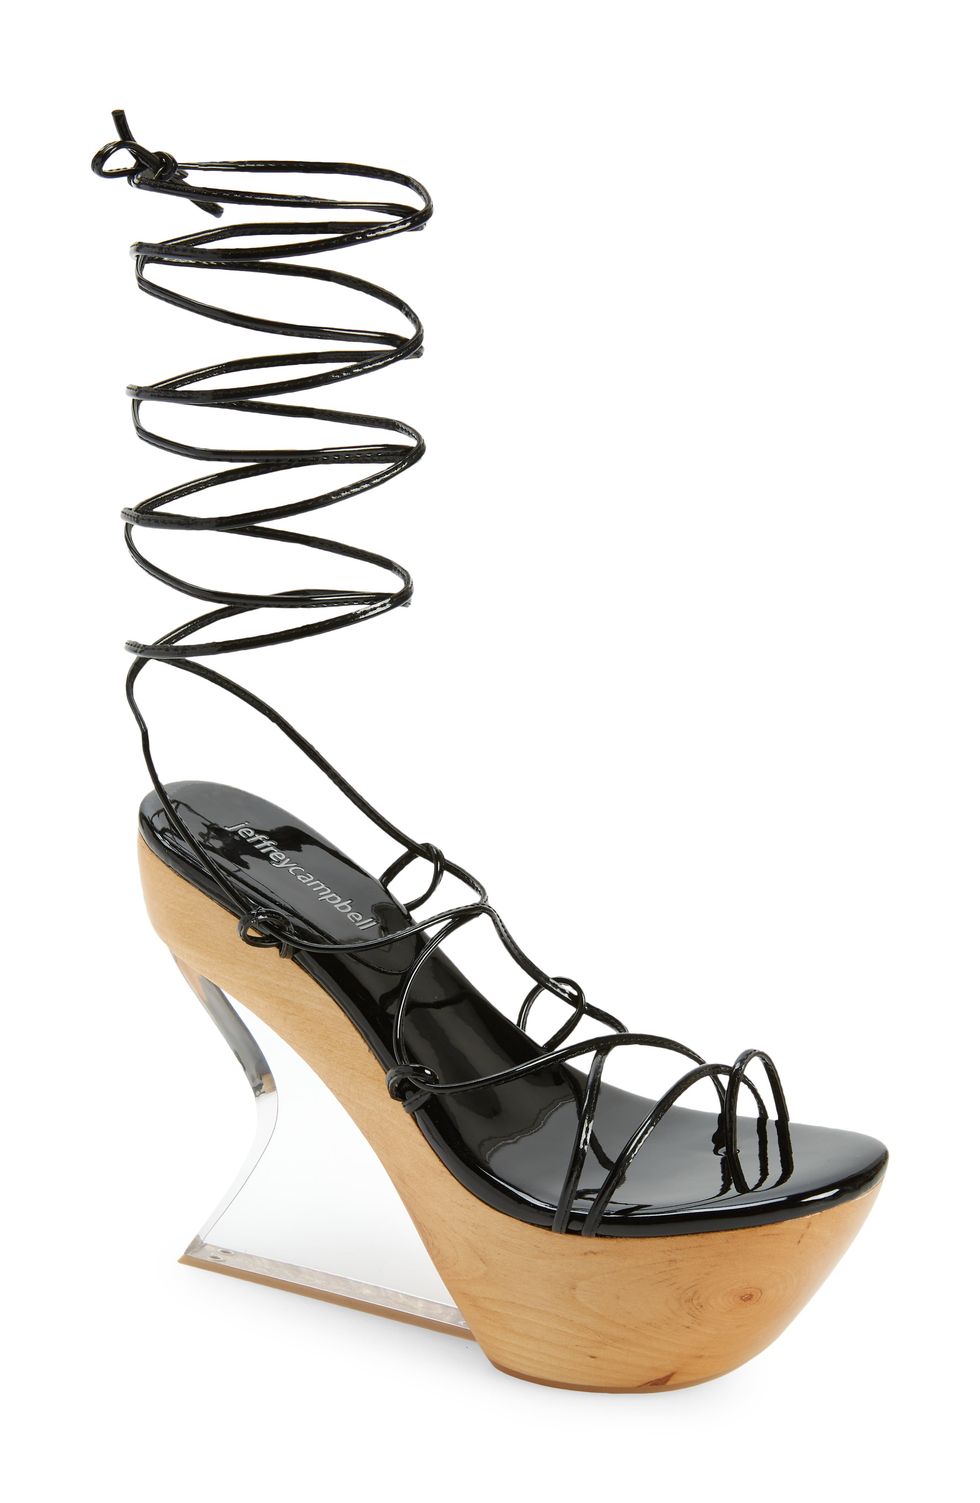 Jeffrey Campbell Droid Ankle Tie Platform Wedge Sandal in Black Patent at Nordstrom, Size 5